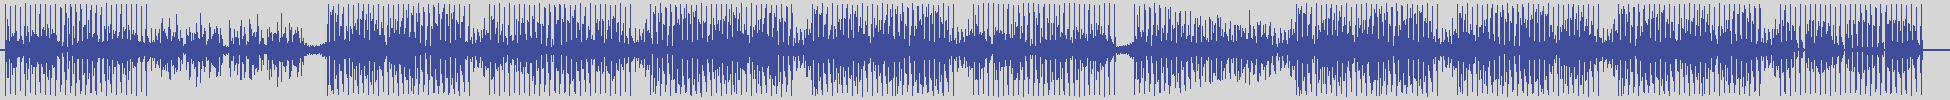 nf_boyz_records [NFY064] The Fingers - Introduce [Sonido De Casa Mix] audio wave form